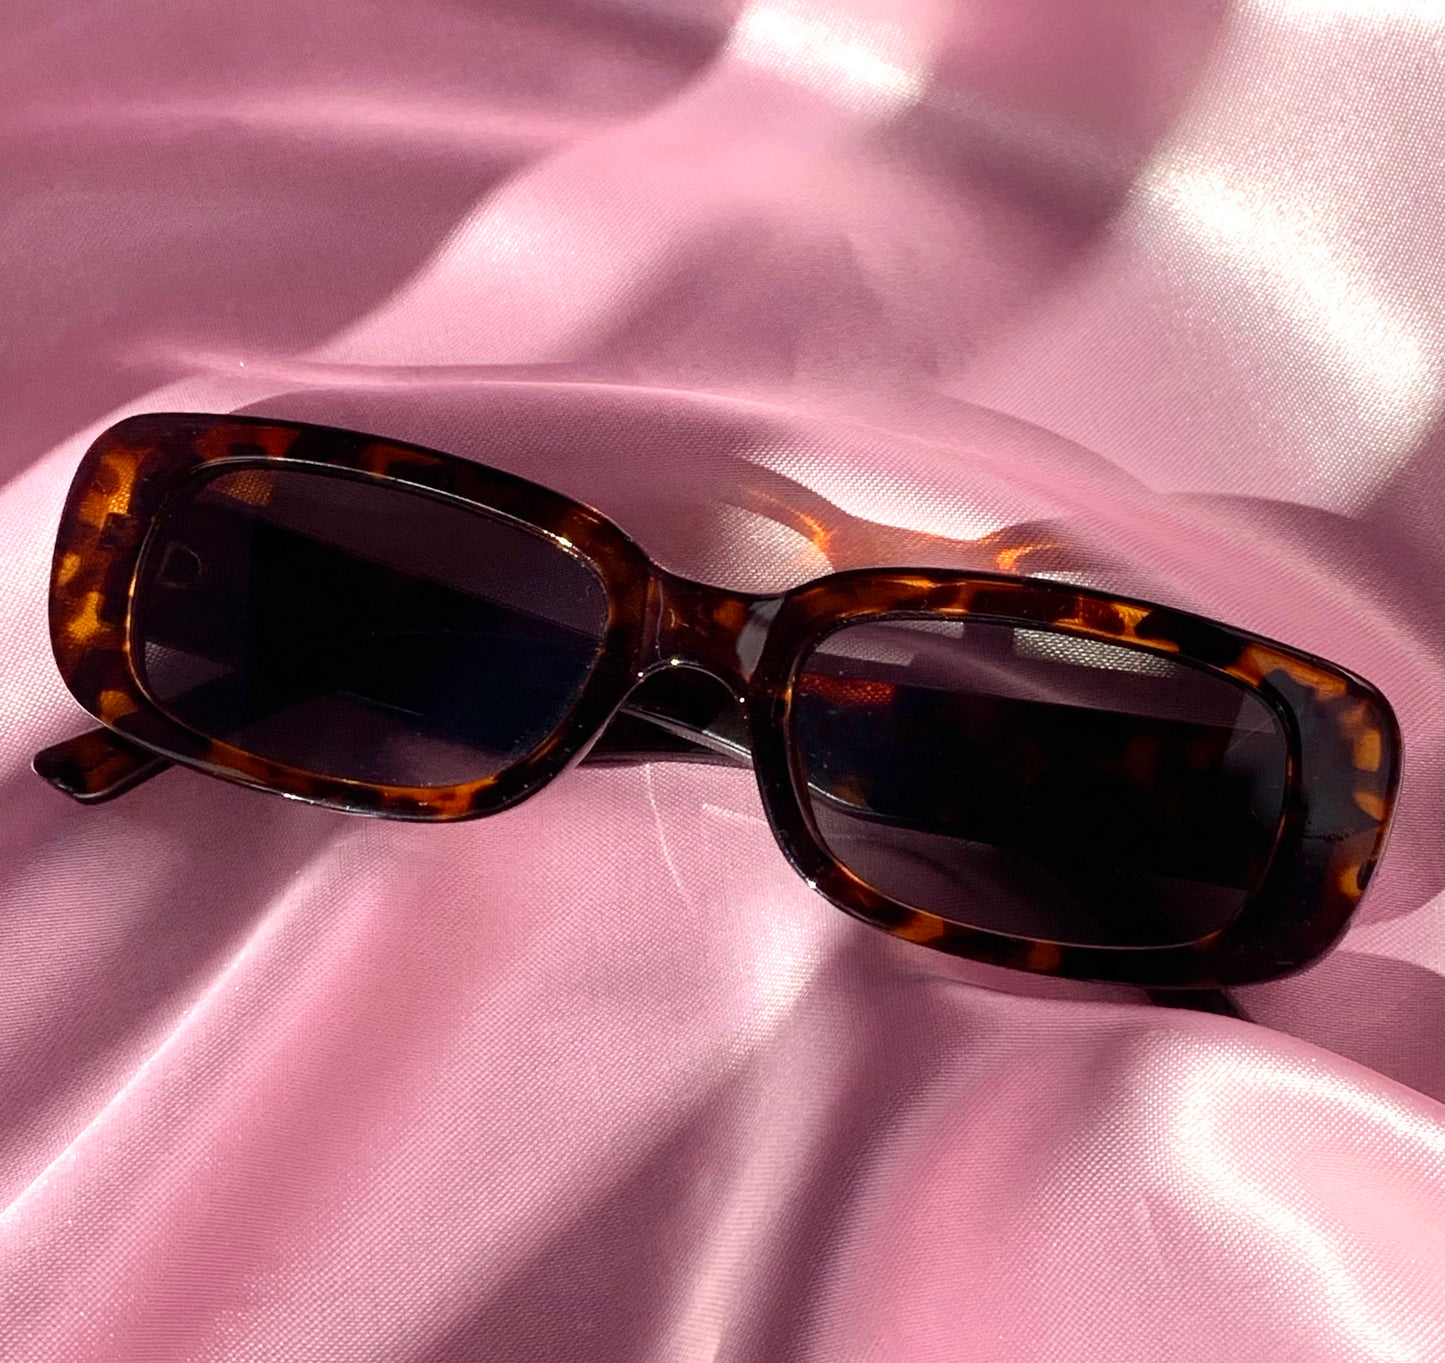 “The Feelings are Neutral” sunglasses